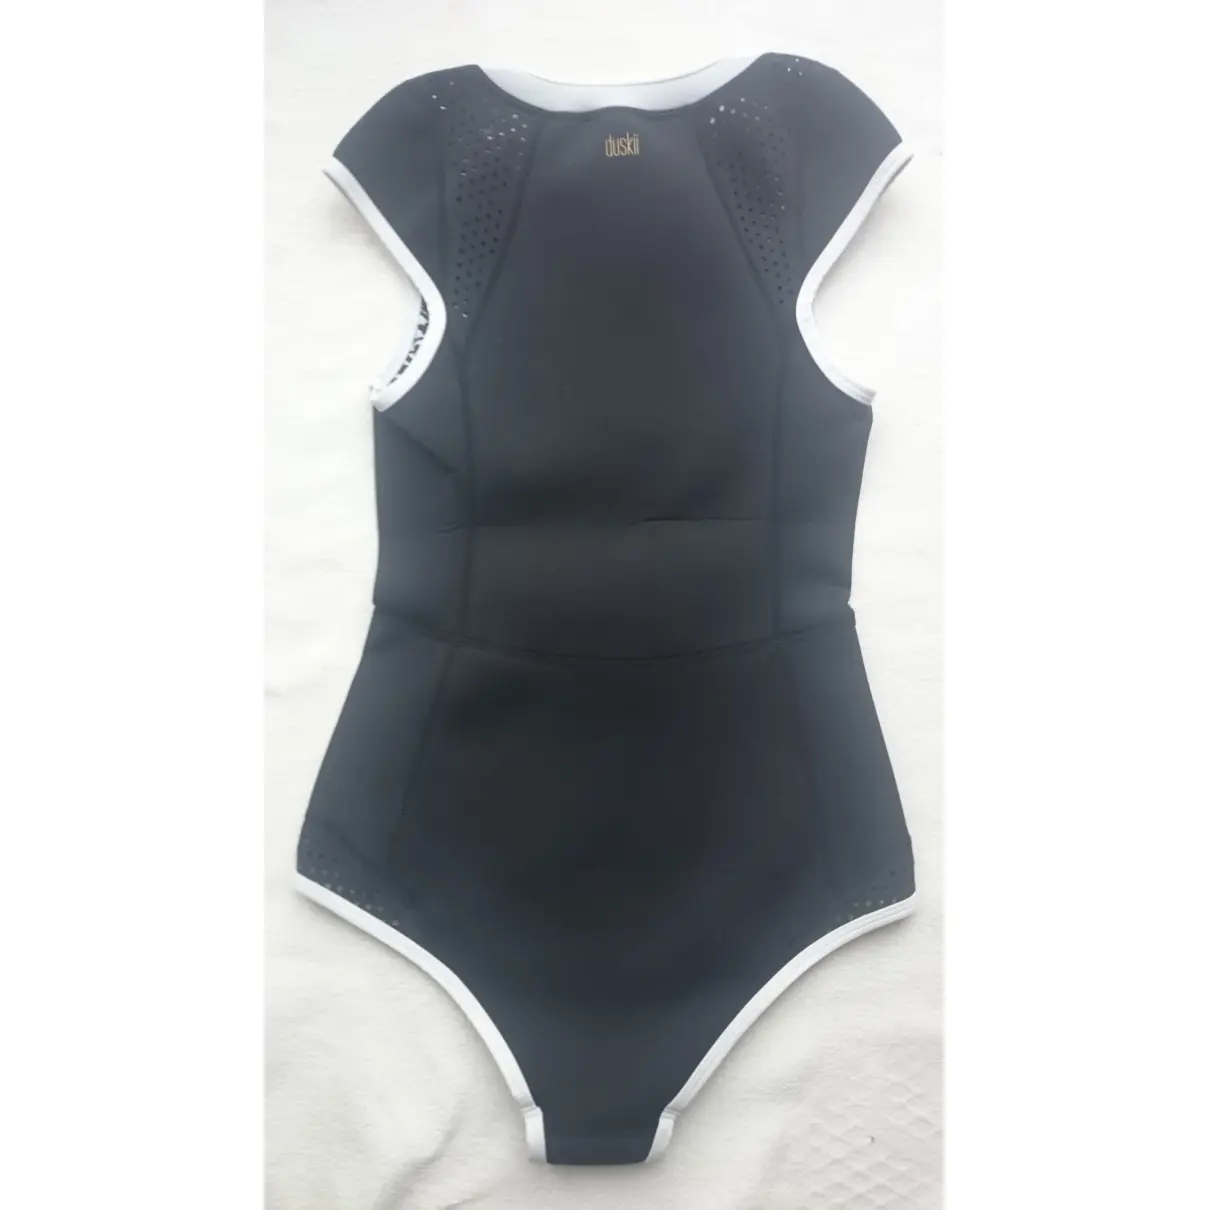 Buy Duskii One-piece swimsuit online